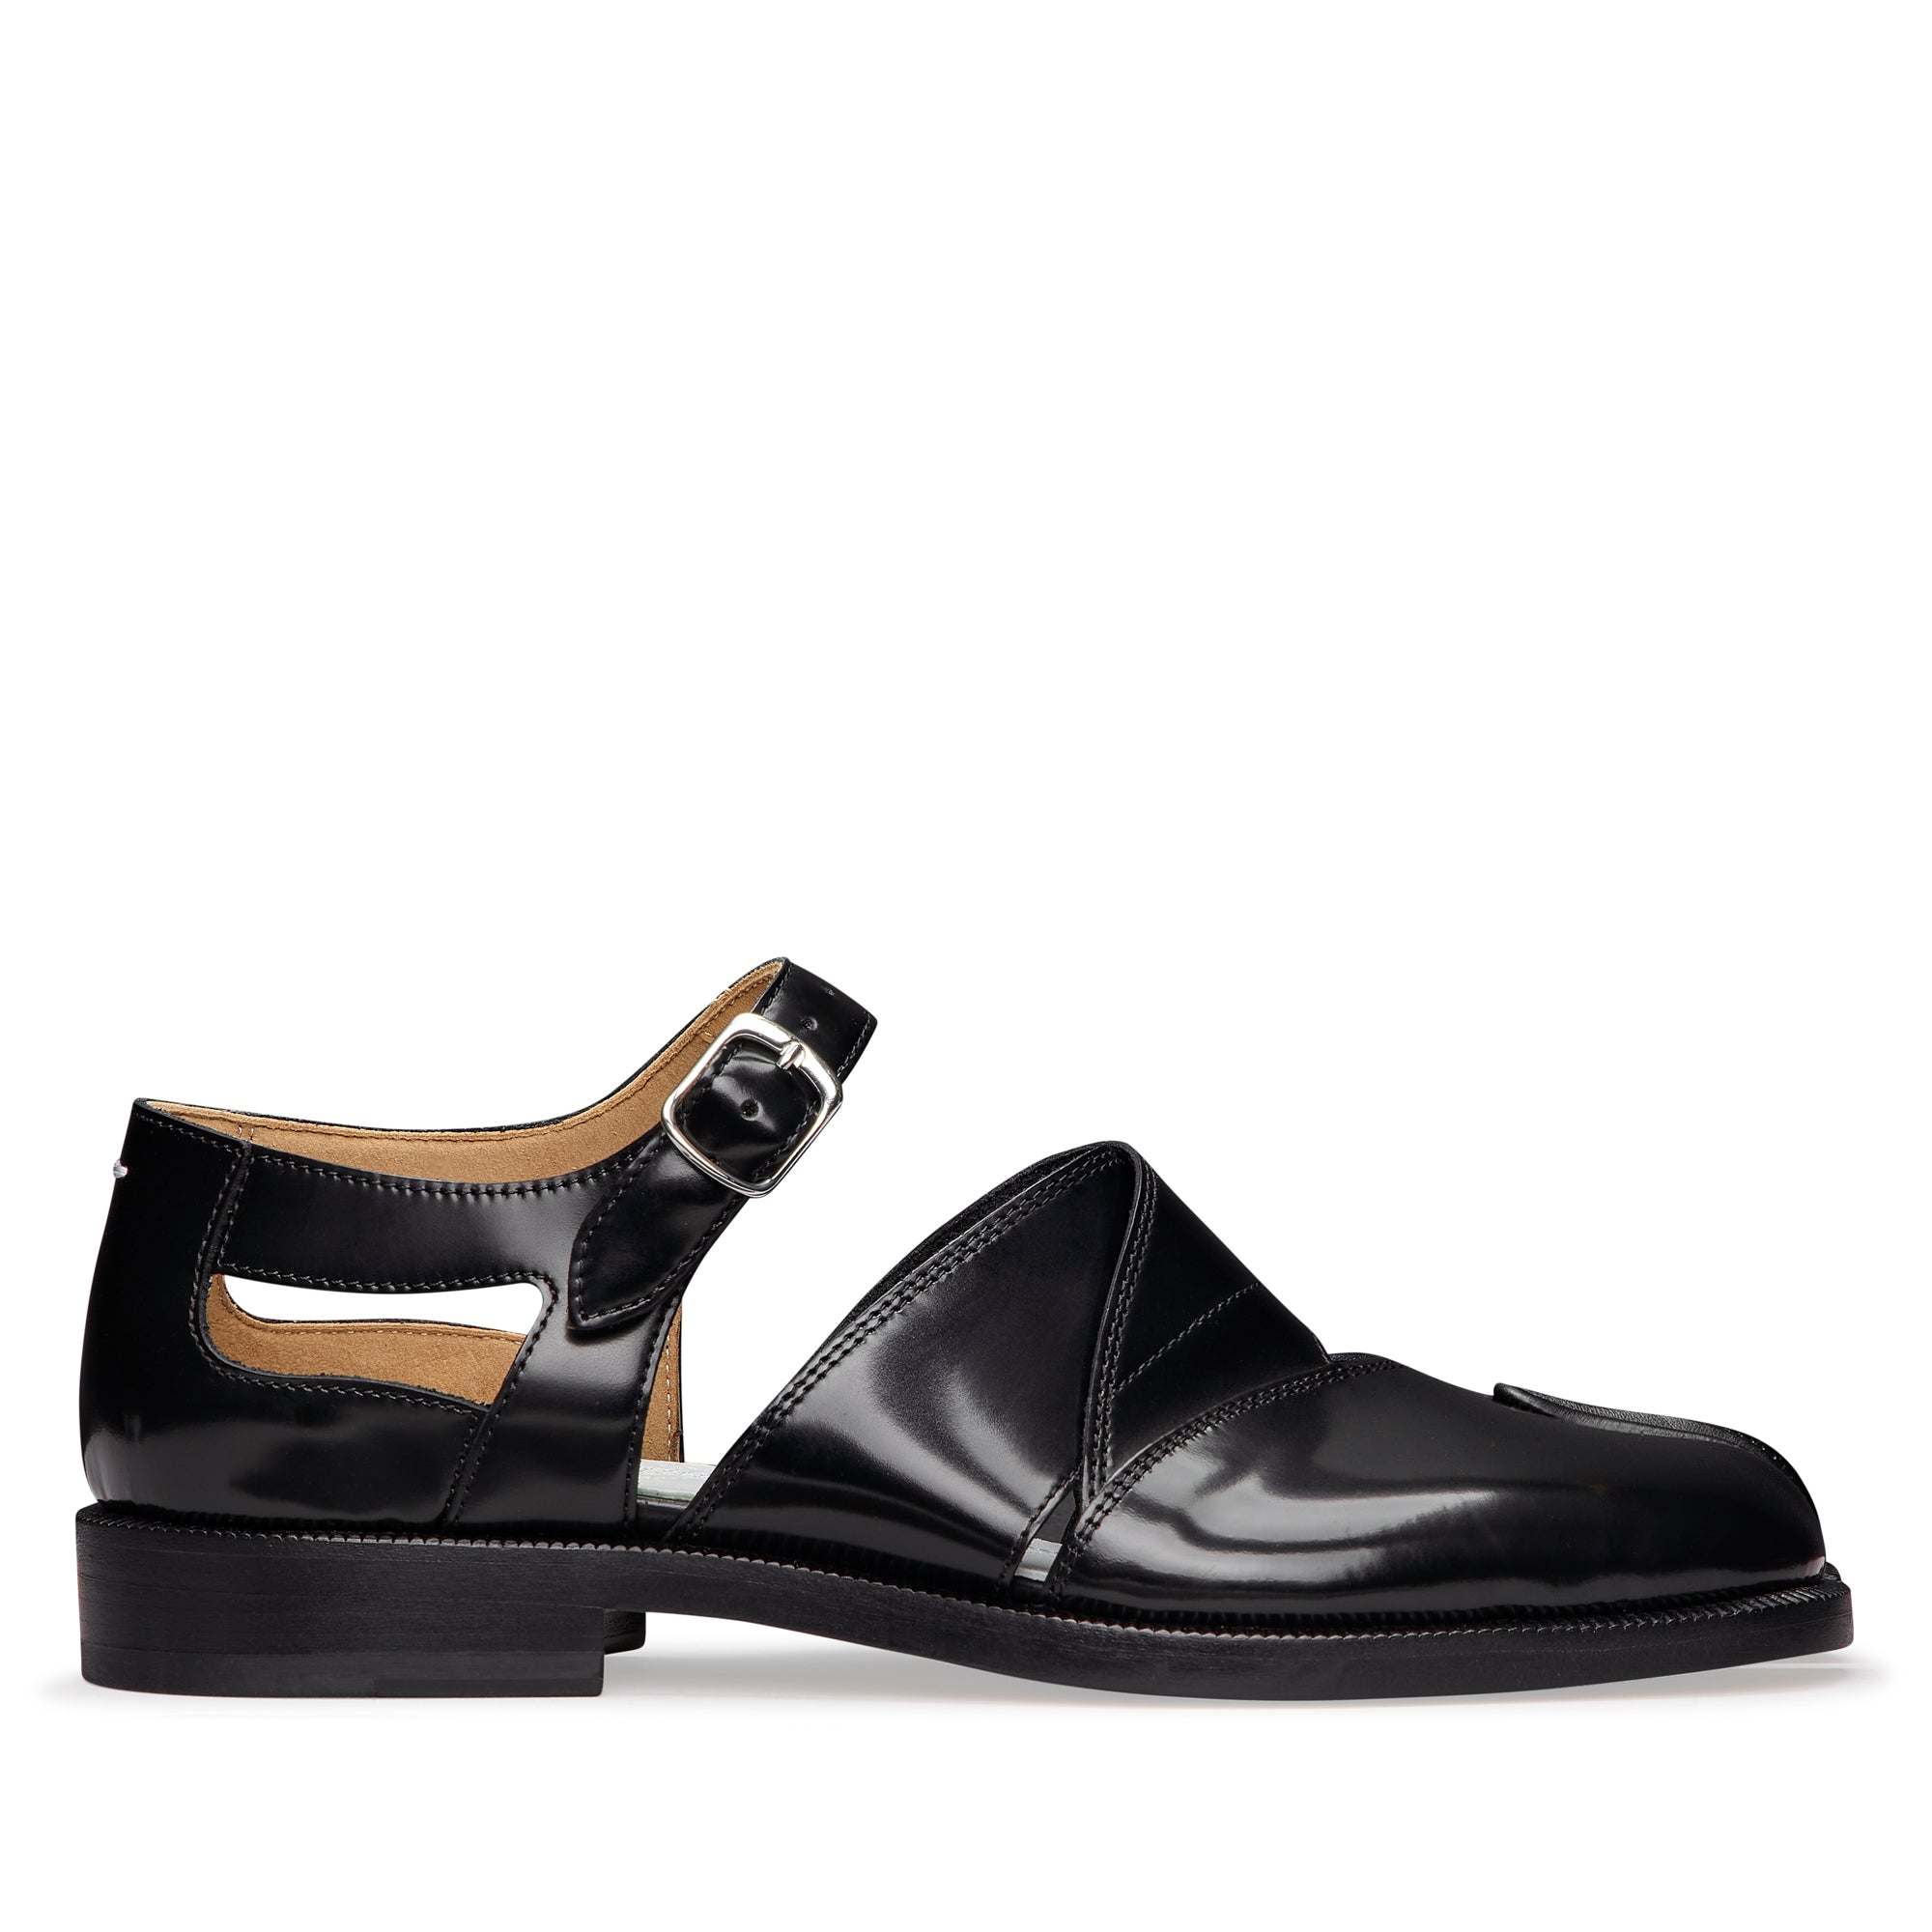 Martin Margiela - Women’s Tabi Leather Sandals - (Black) view 1